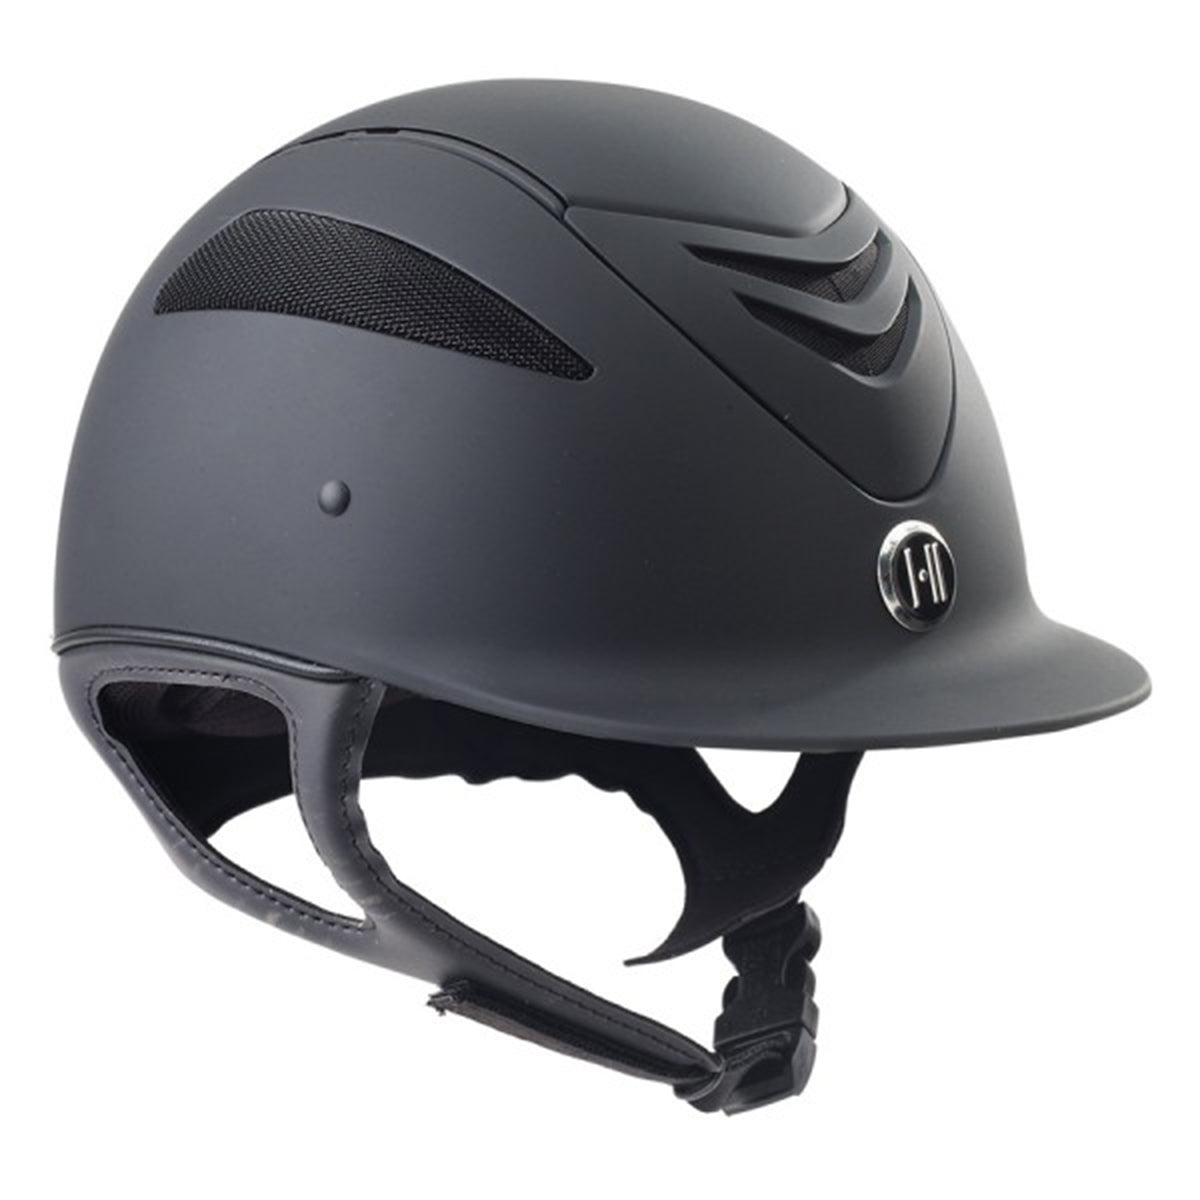 One K Defender Black Matte JR Helmet